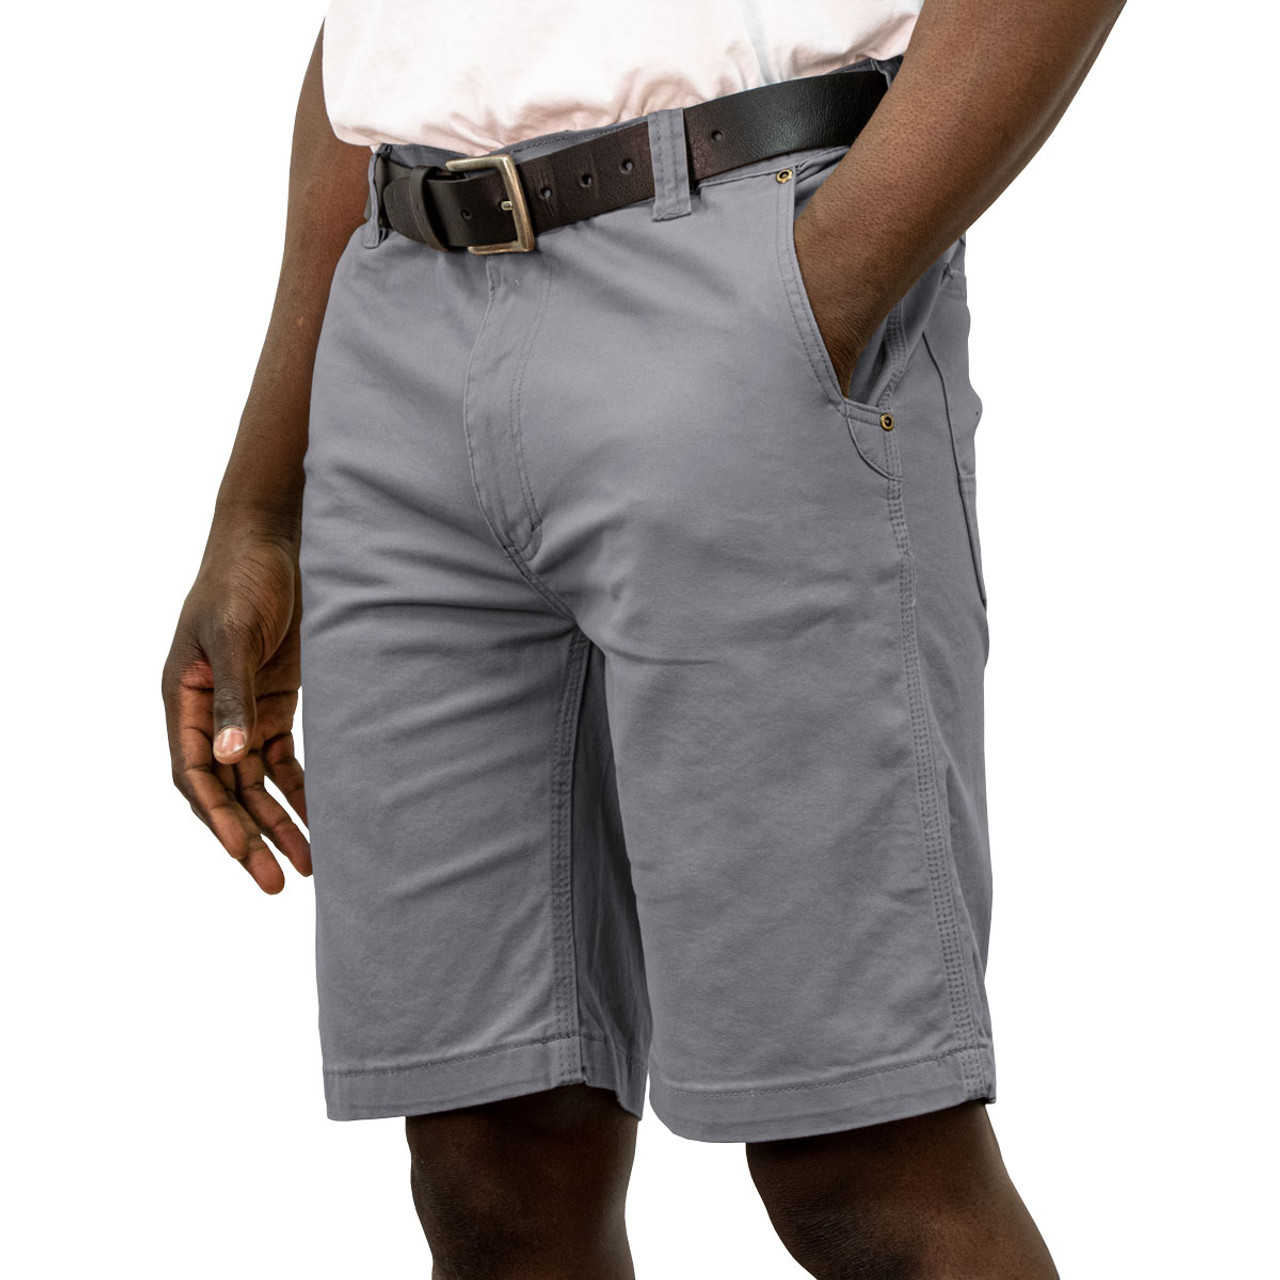 KEY Flex Foreman Utility Work Shorts for Men